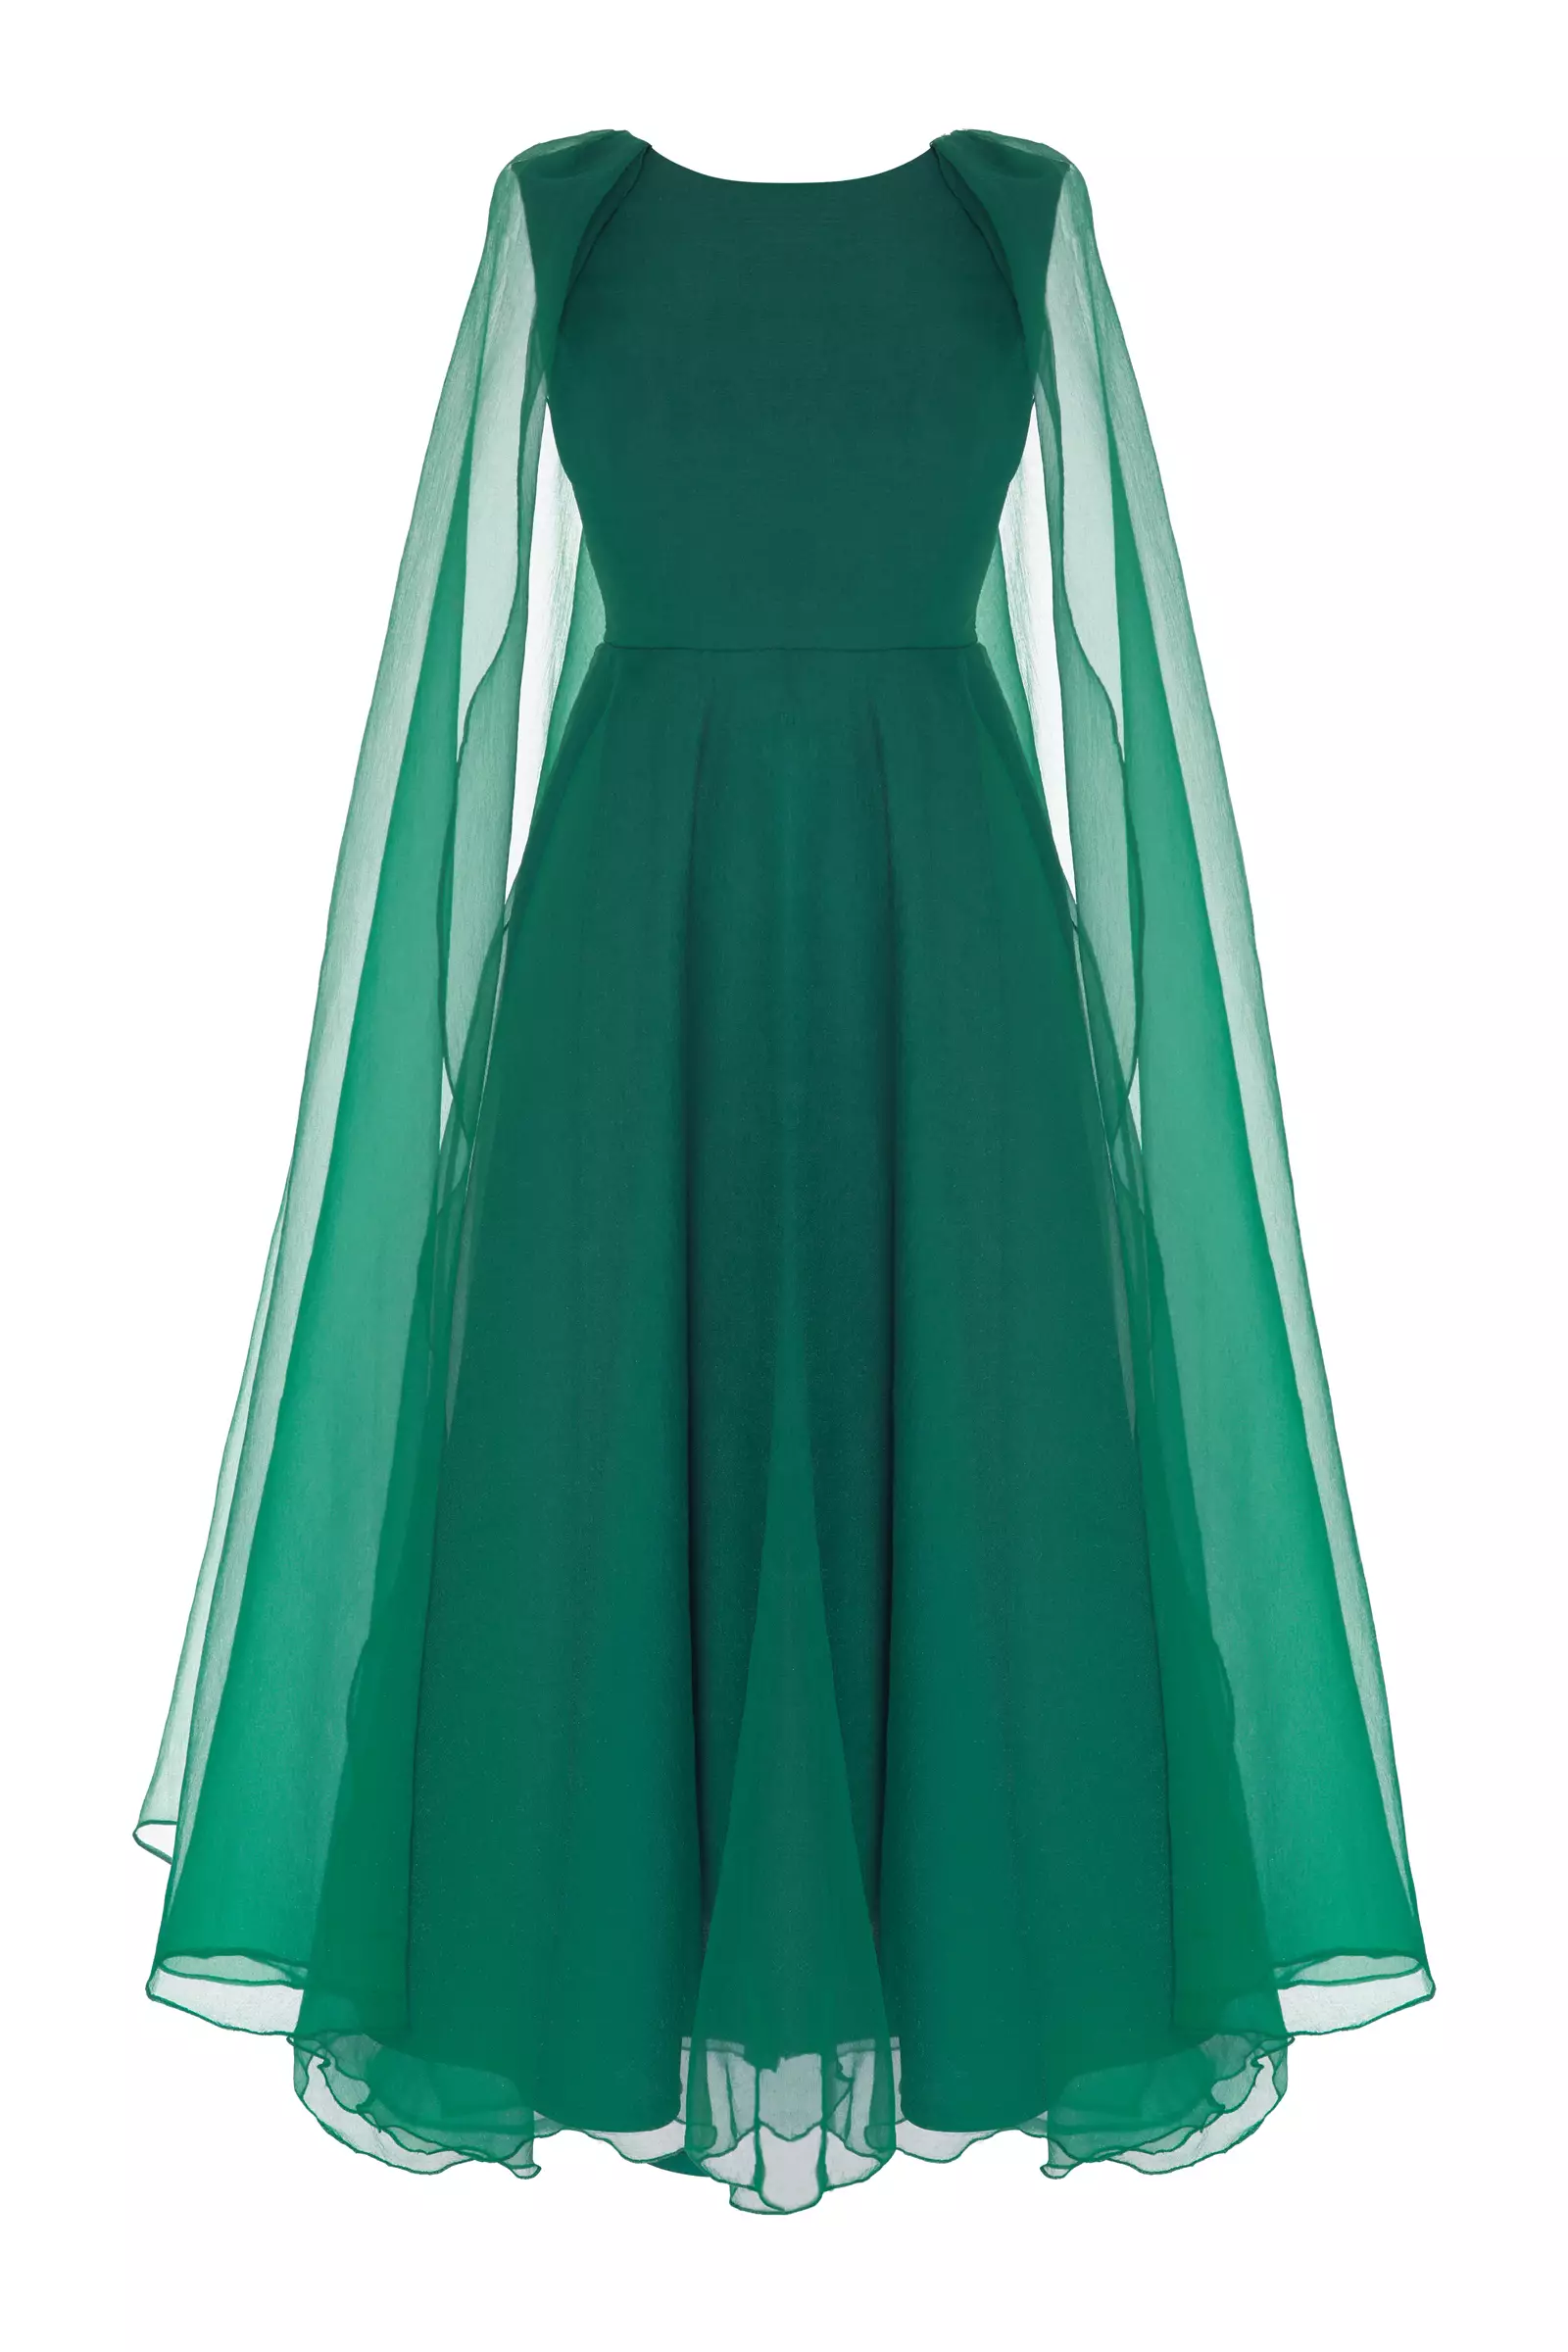 Green tulle long sleeve maxi dress